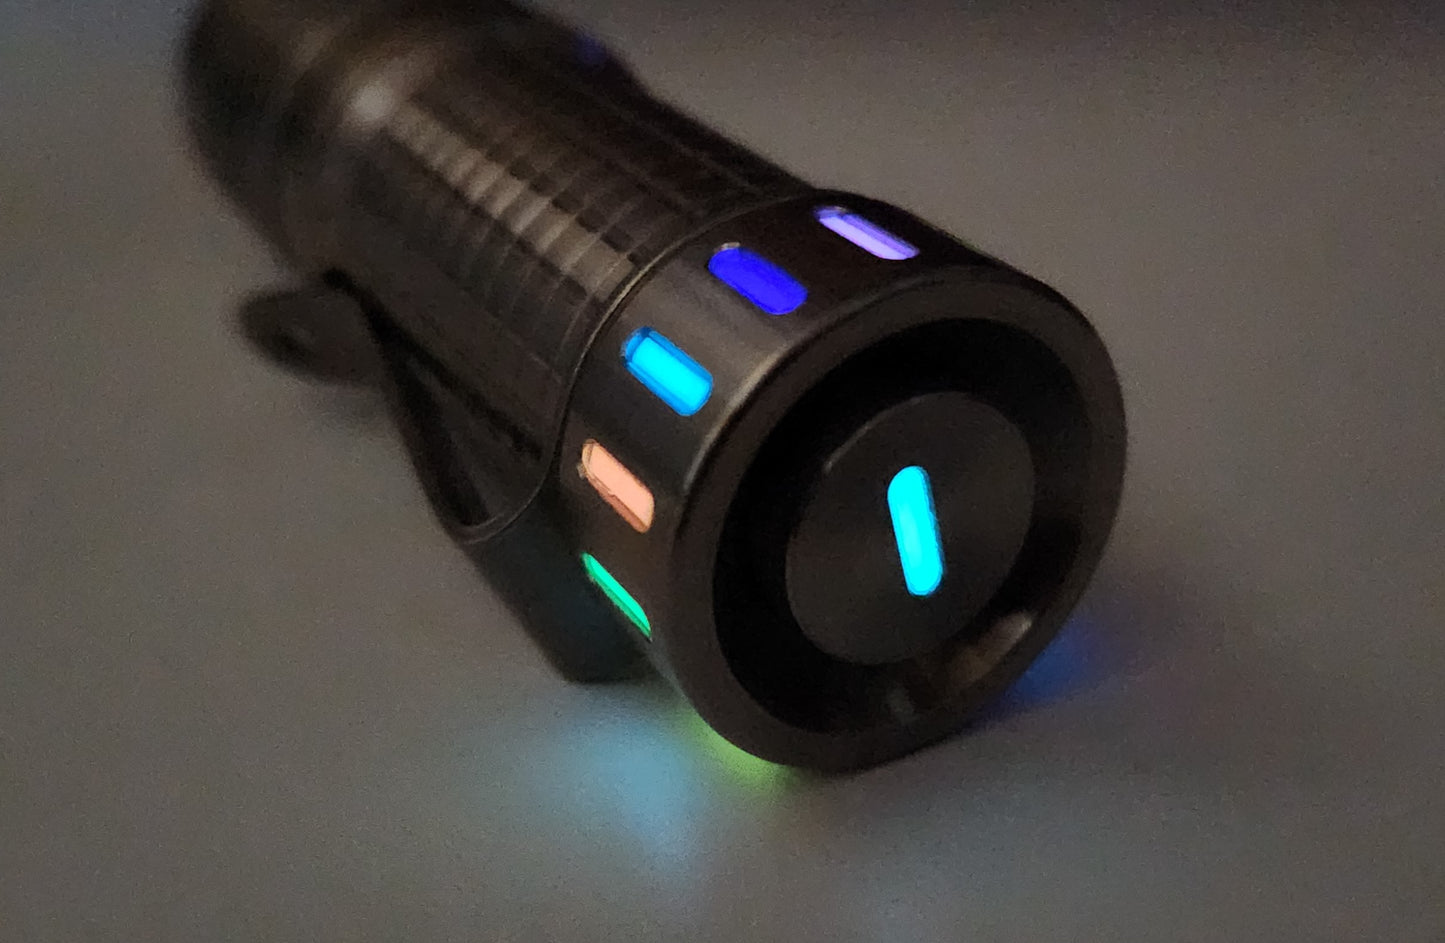 Maeerxu XT3 V2 Titanium GLOW *CUSTOM* LED Flashlight